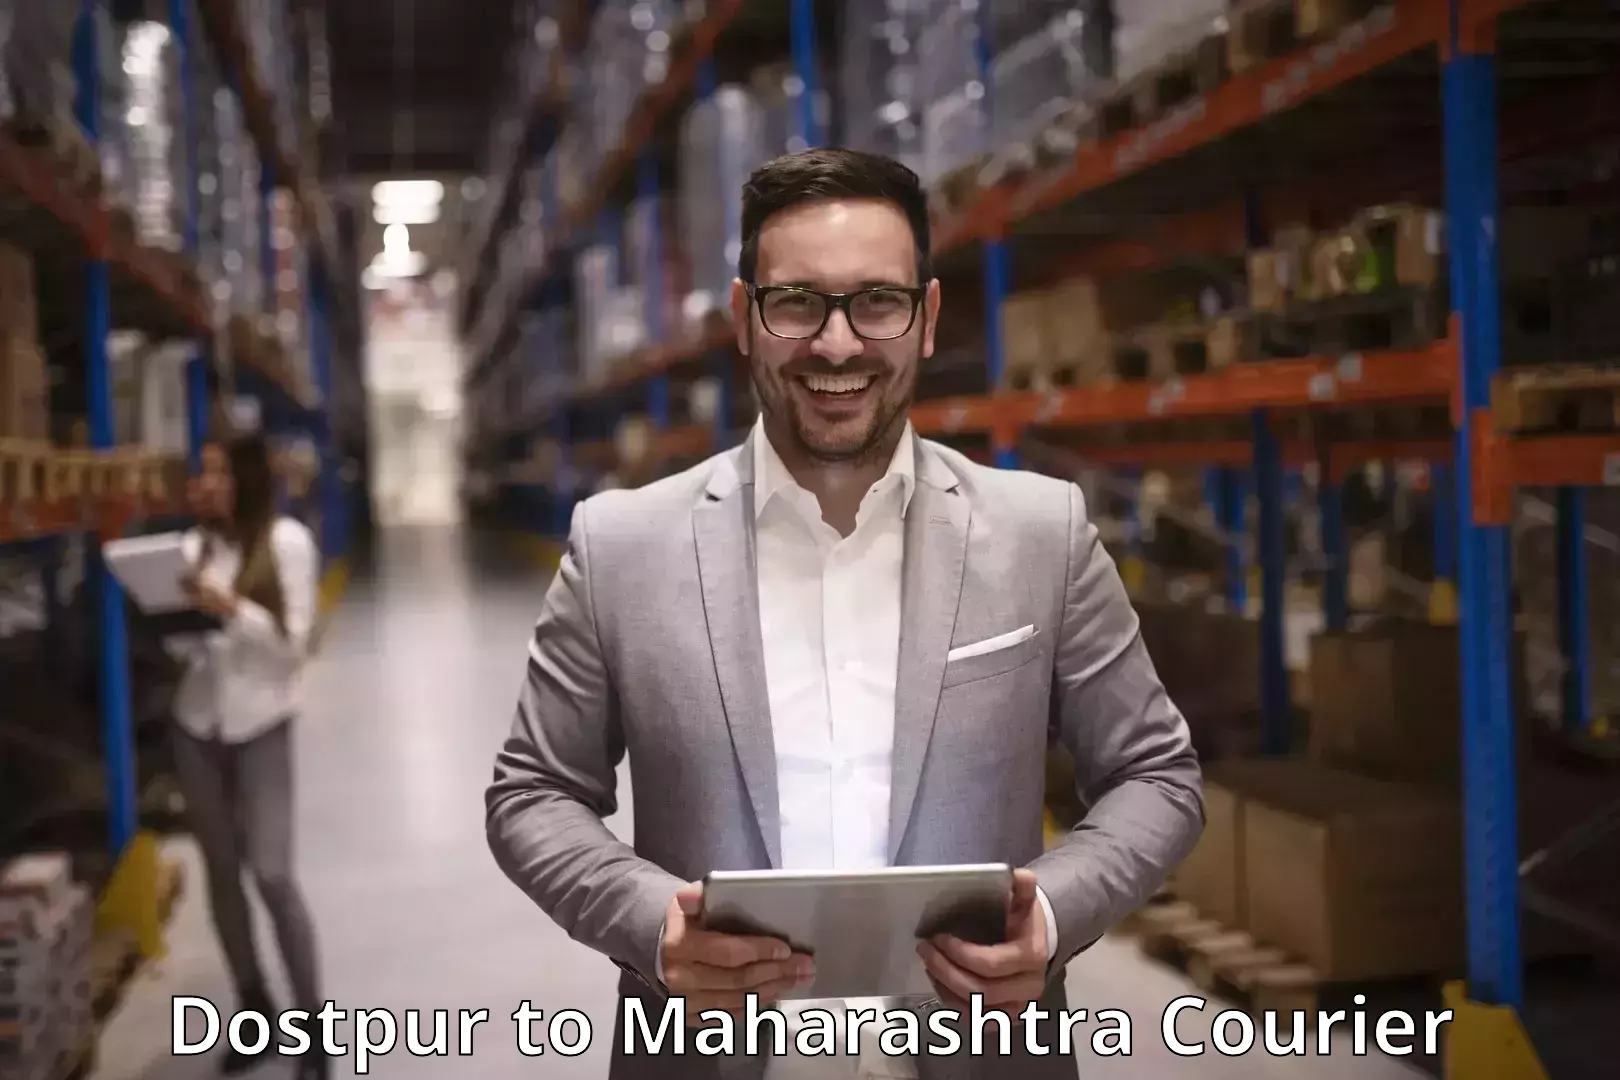 Courier service comparison Dostpur to Maharashtra